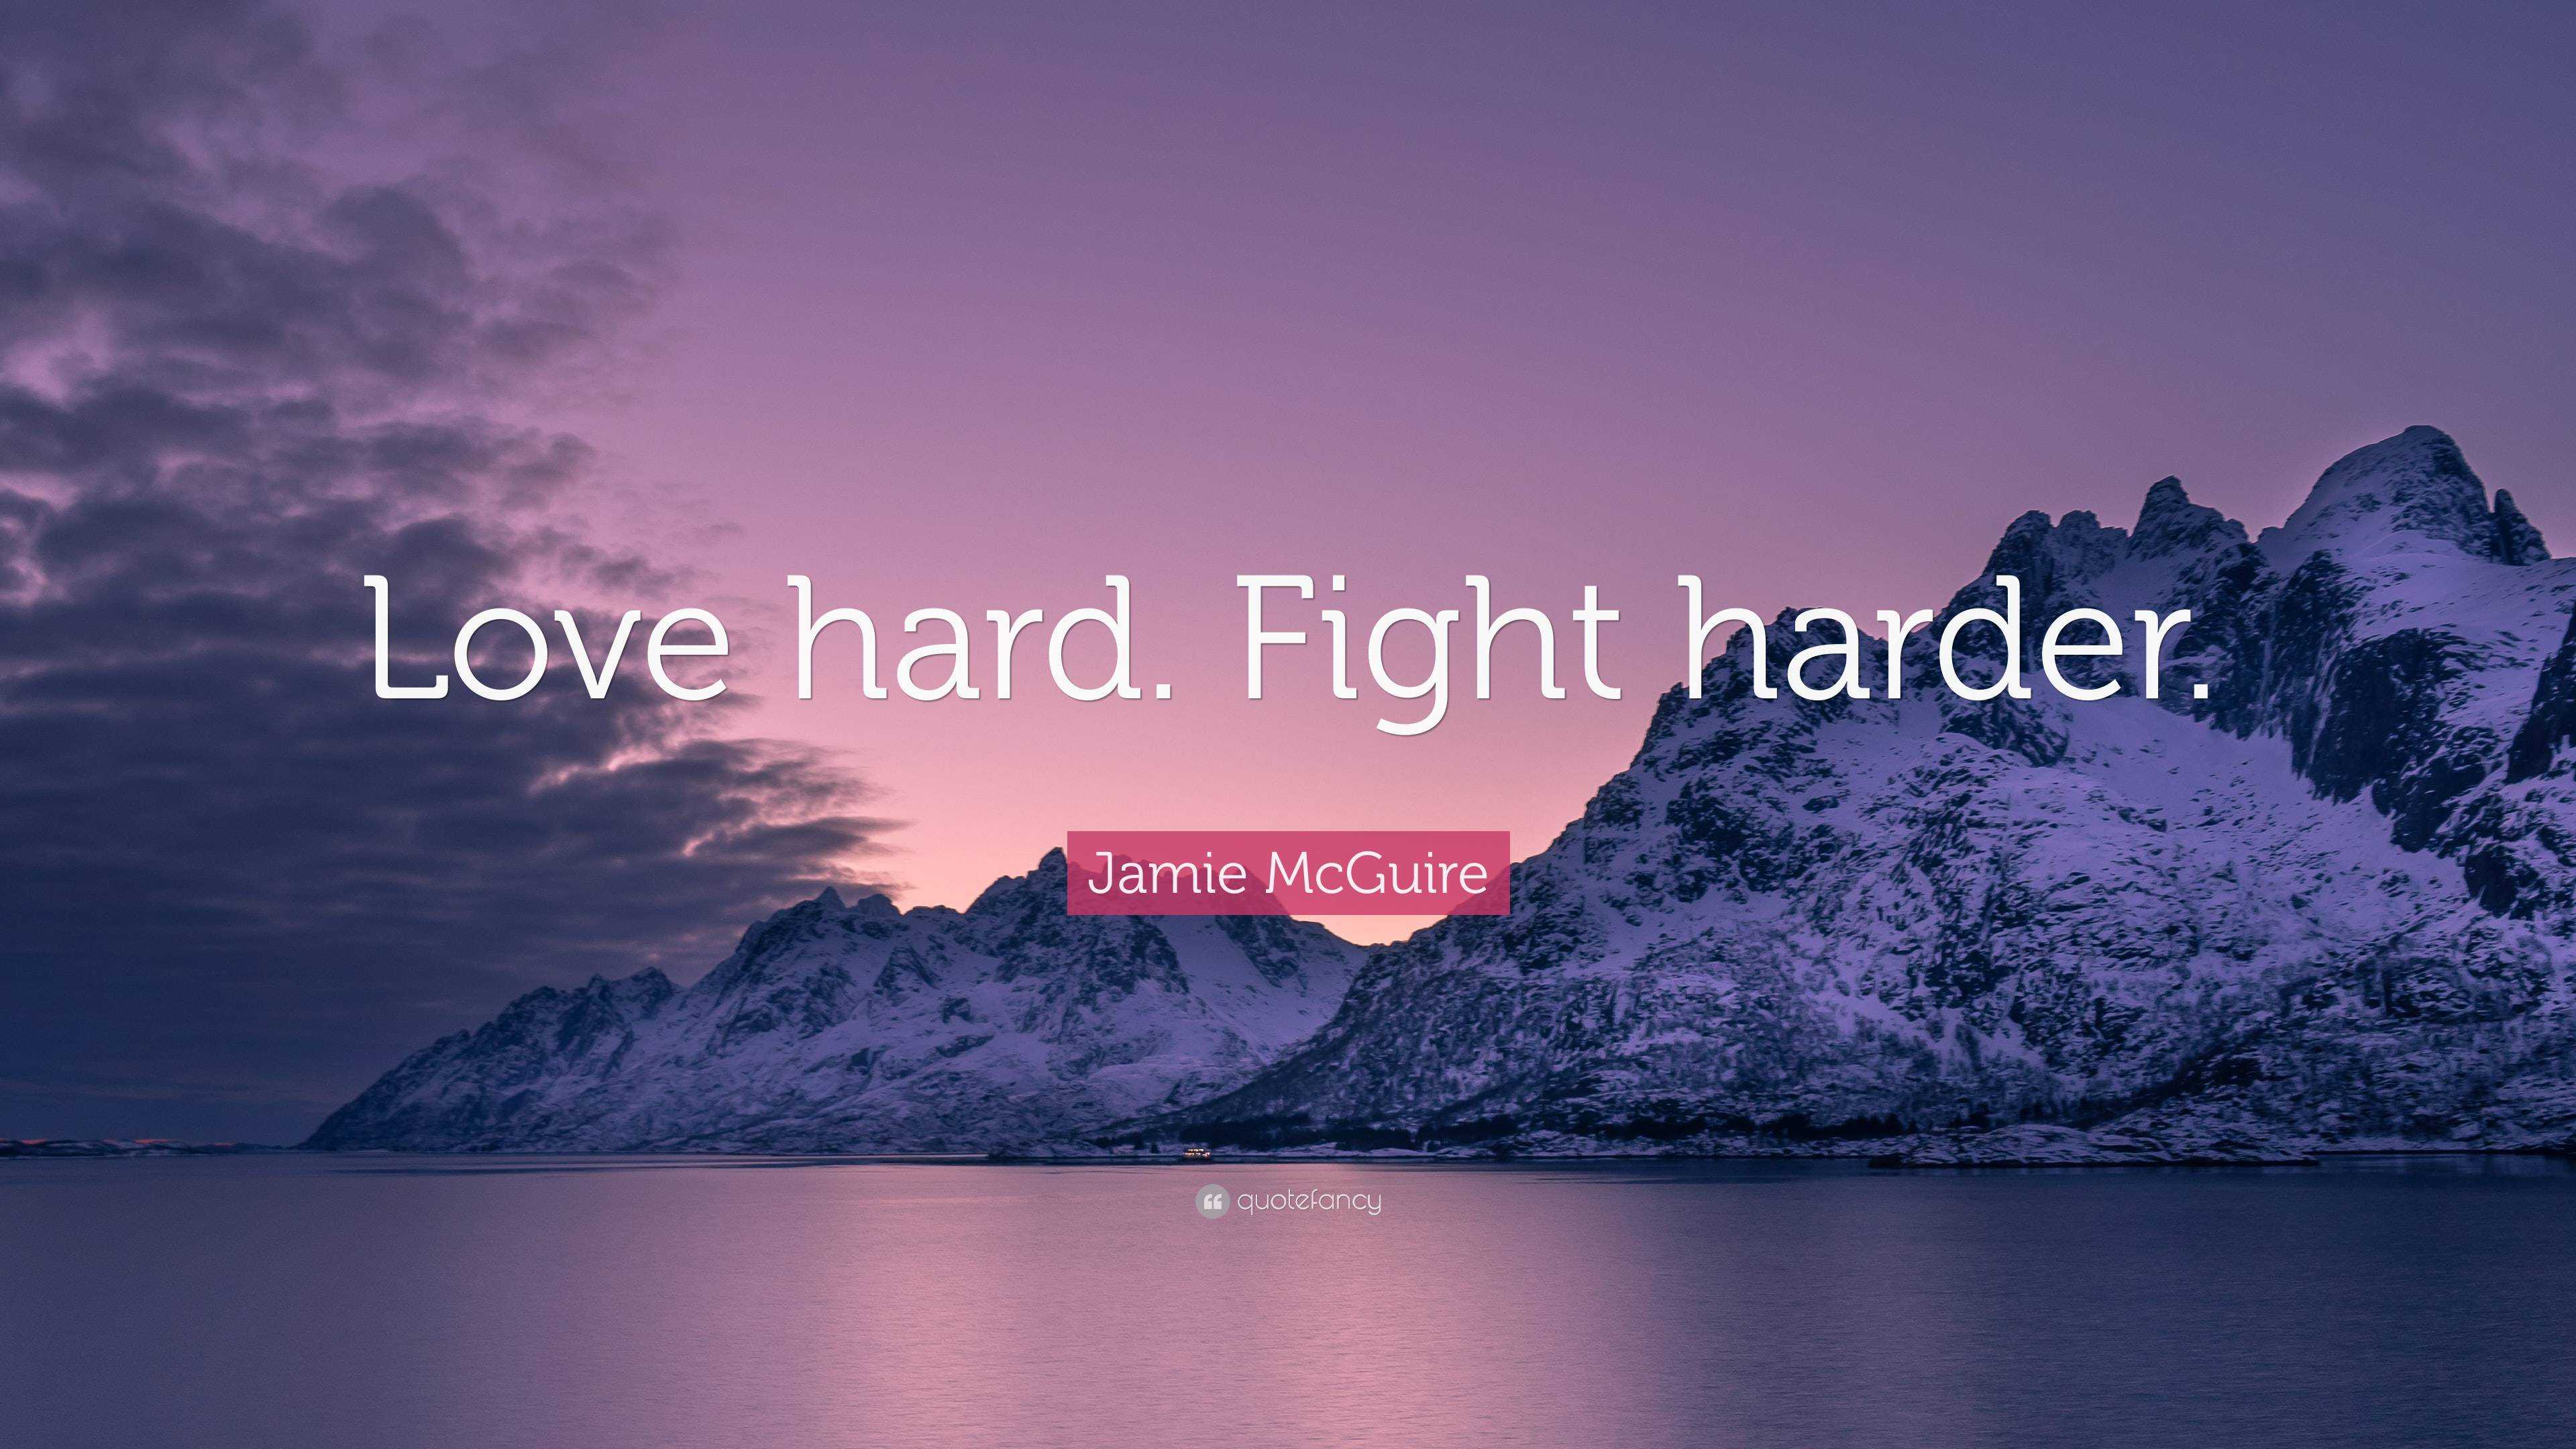 Jamie McGuire Quote: “Love hard. Fight harder.”